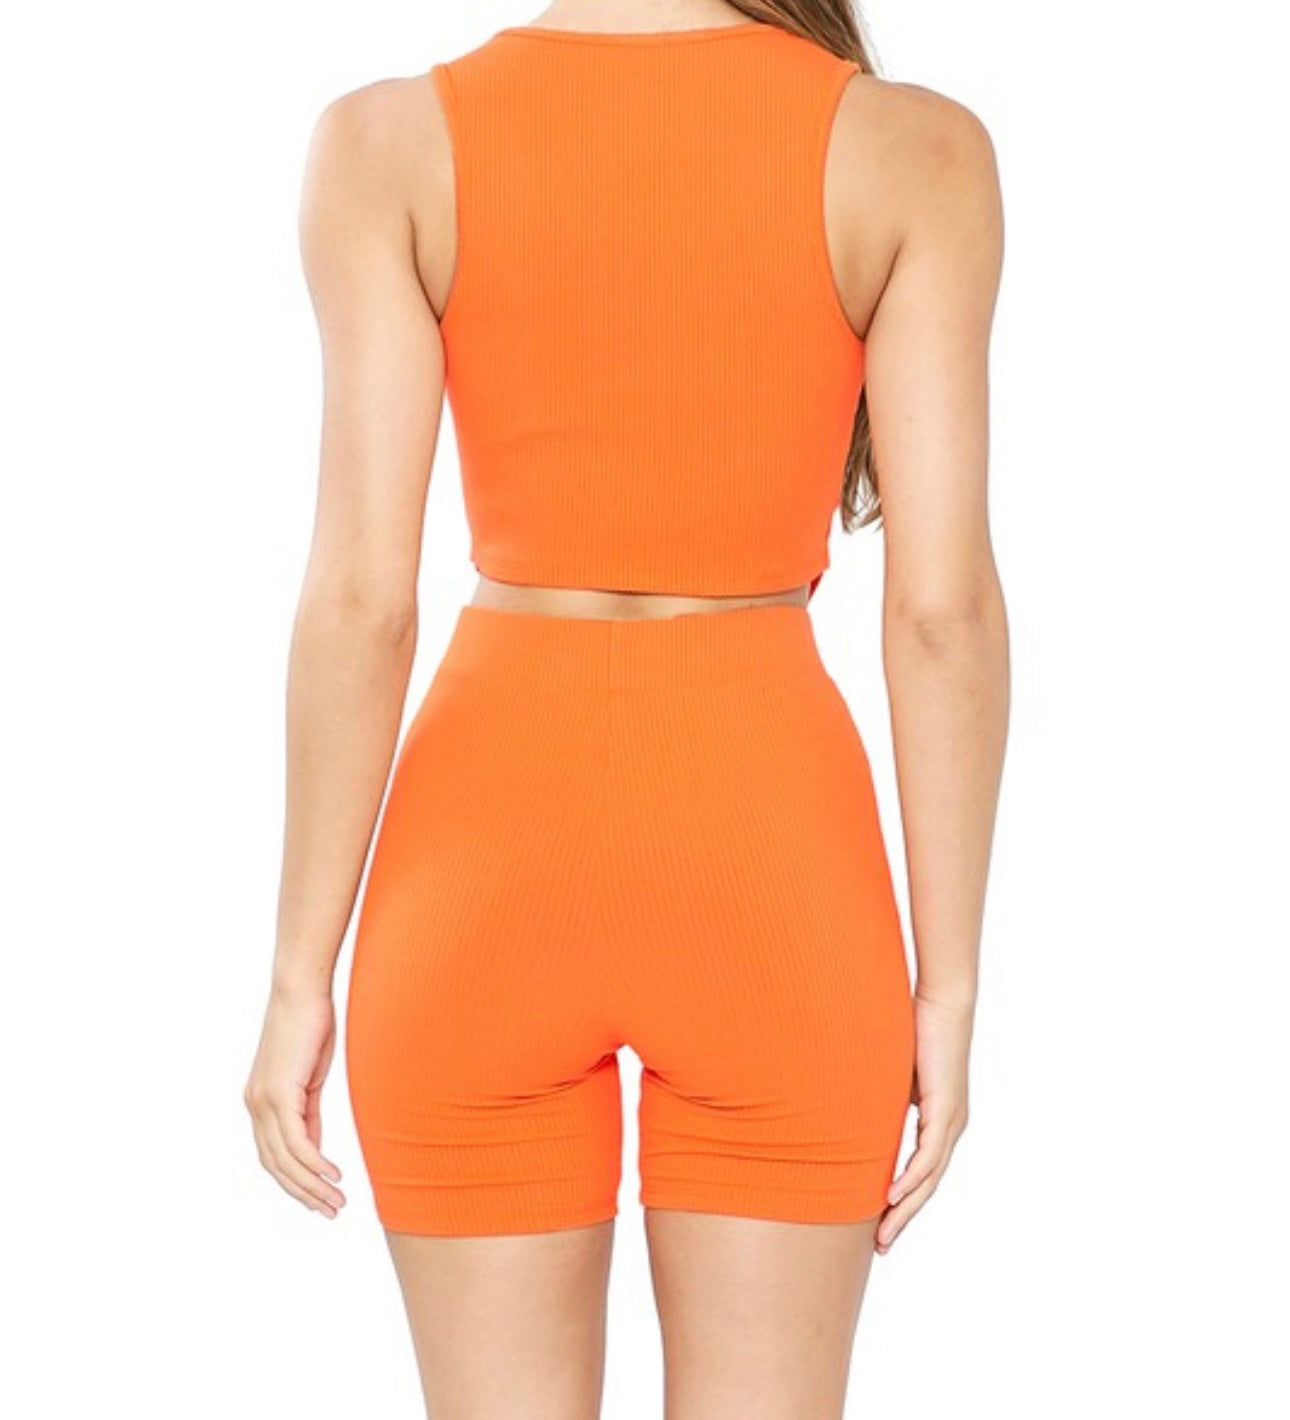 Genessis Biker Shorts Set (Orange)